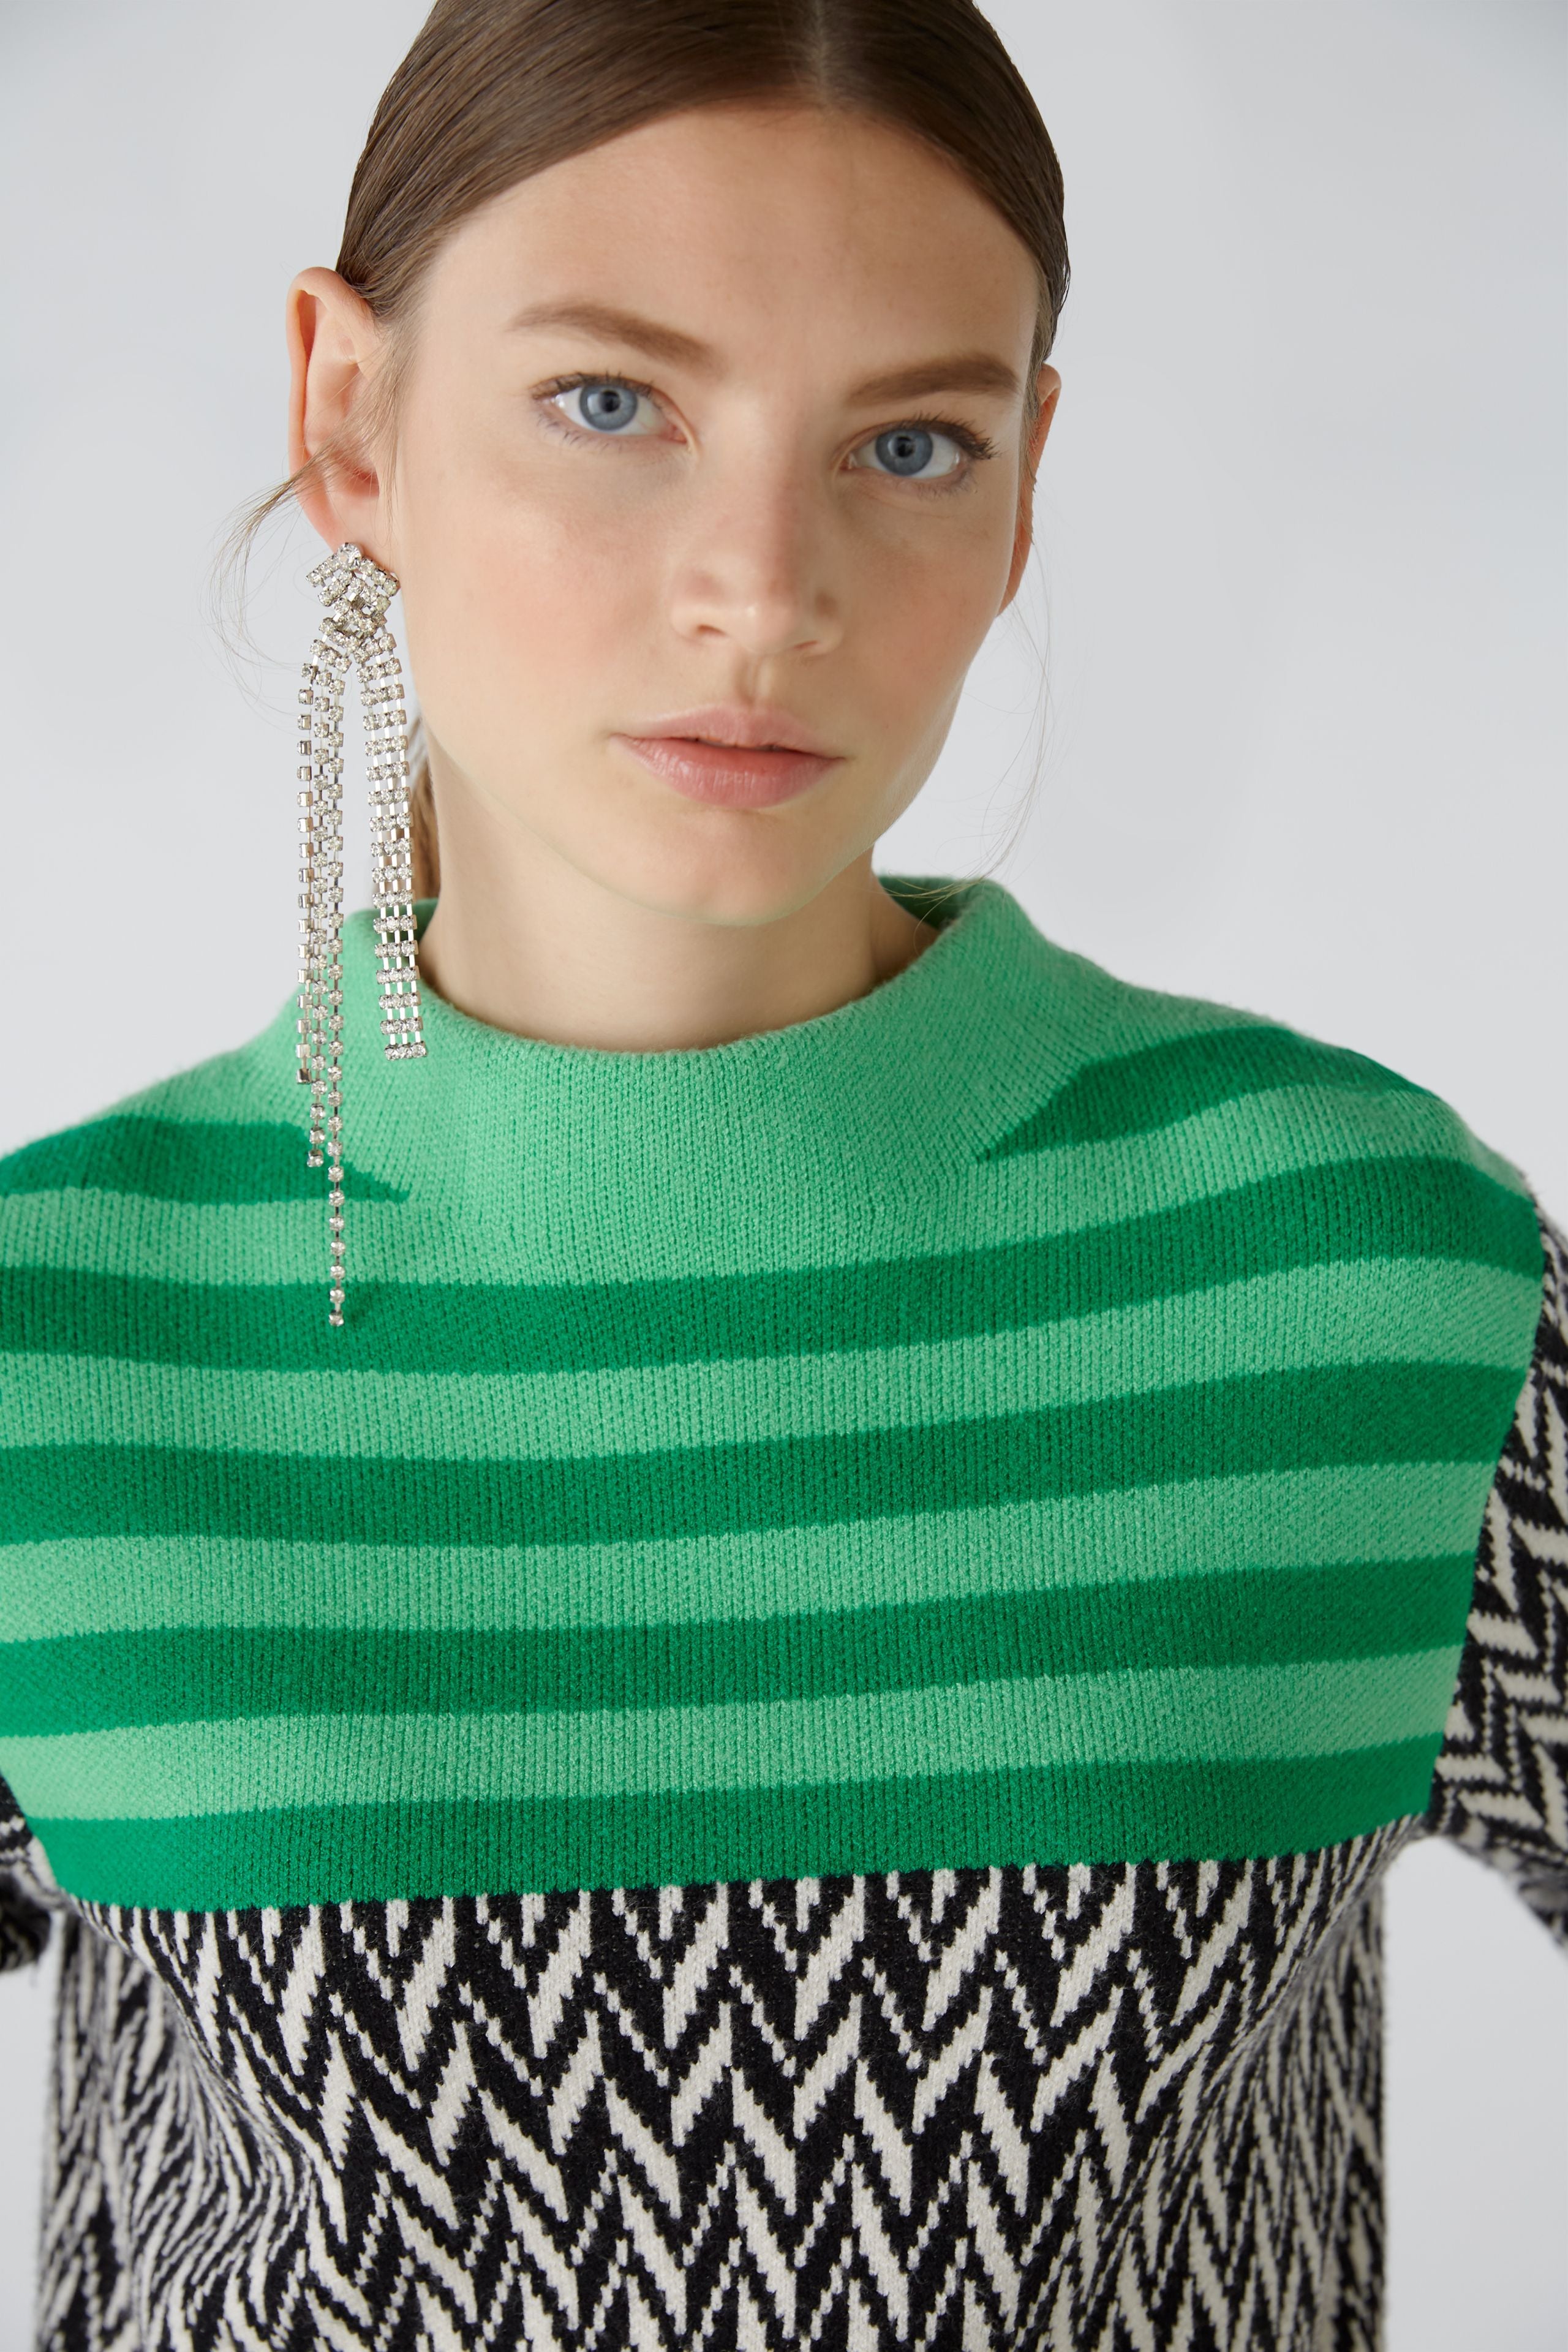 Contrast Print Knit in Green/Black